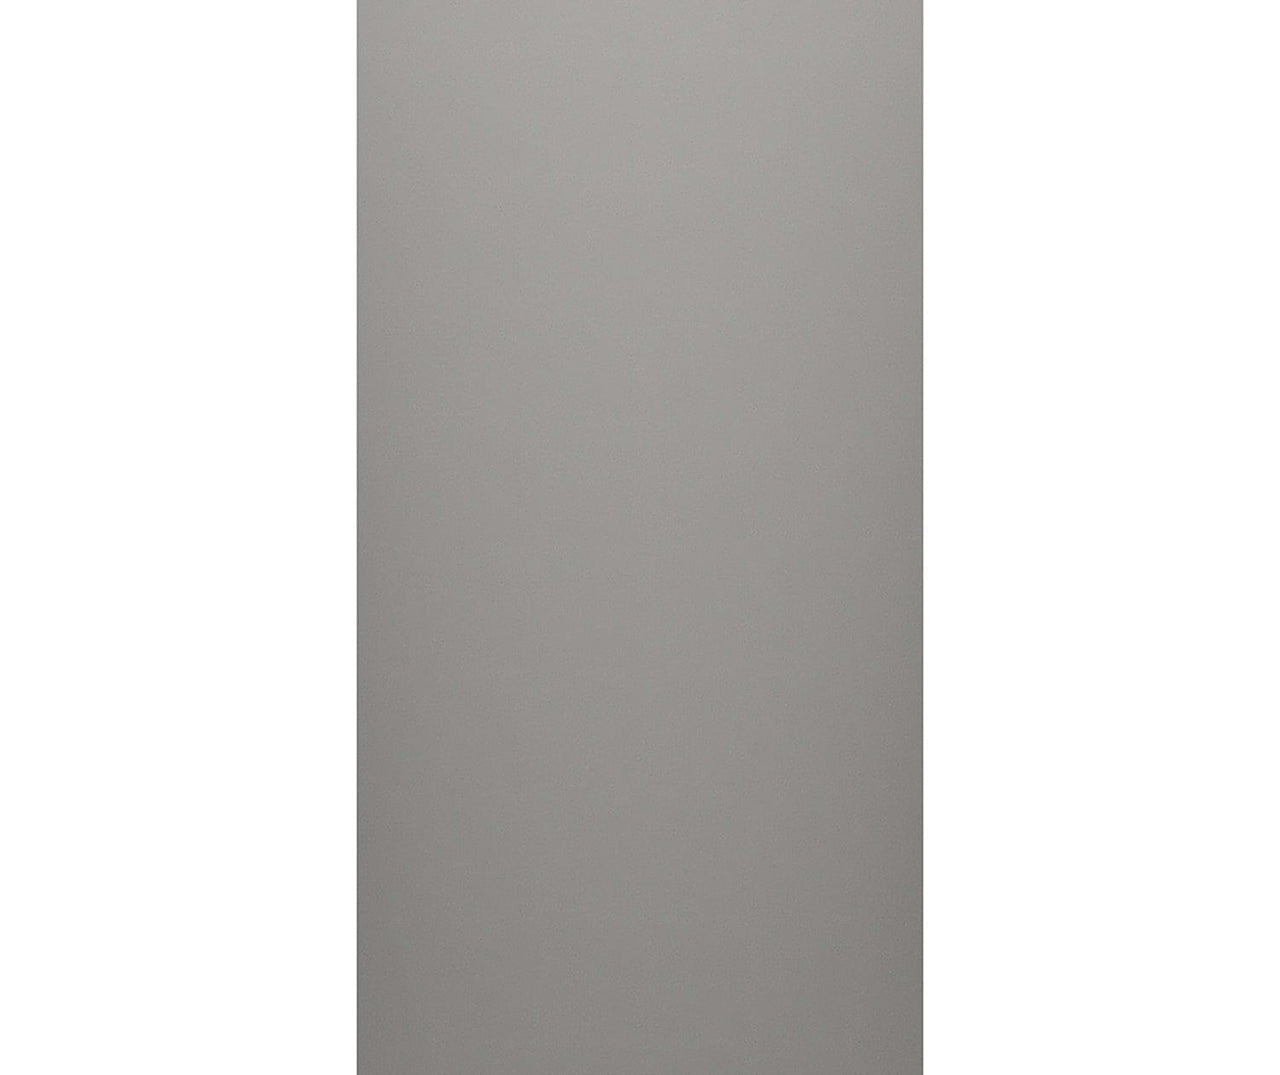 SMMK-8462-1 62 x 84 Swanstone Smooth Tile Glue up Bathtub and Shower Single Wall Panel  - BNGBath